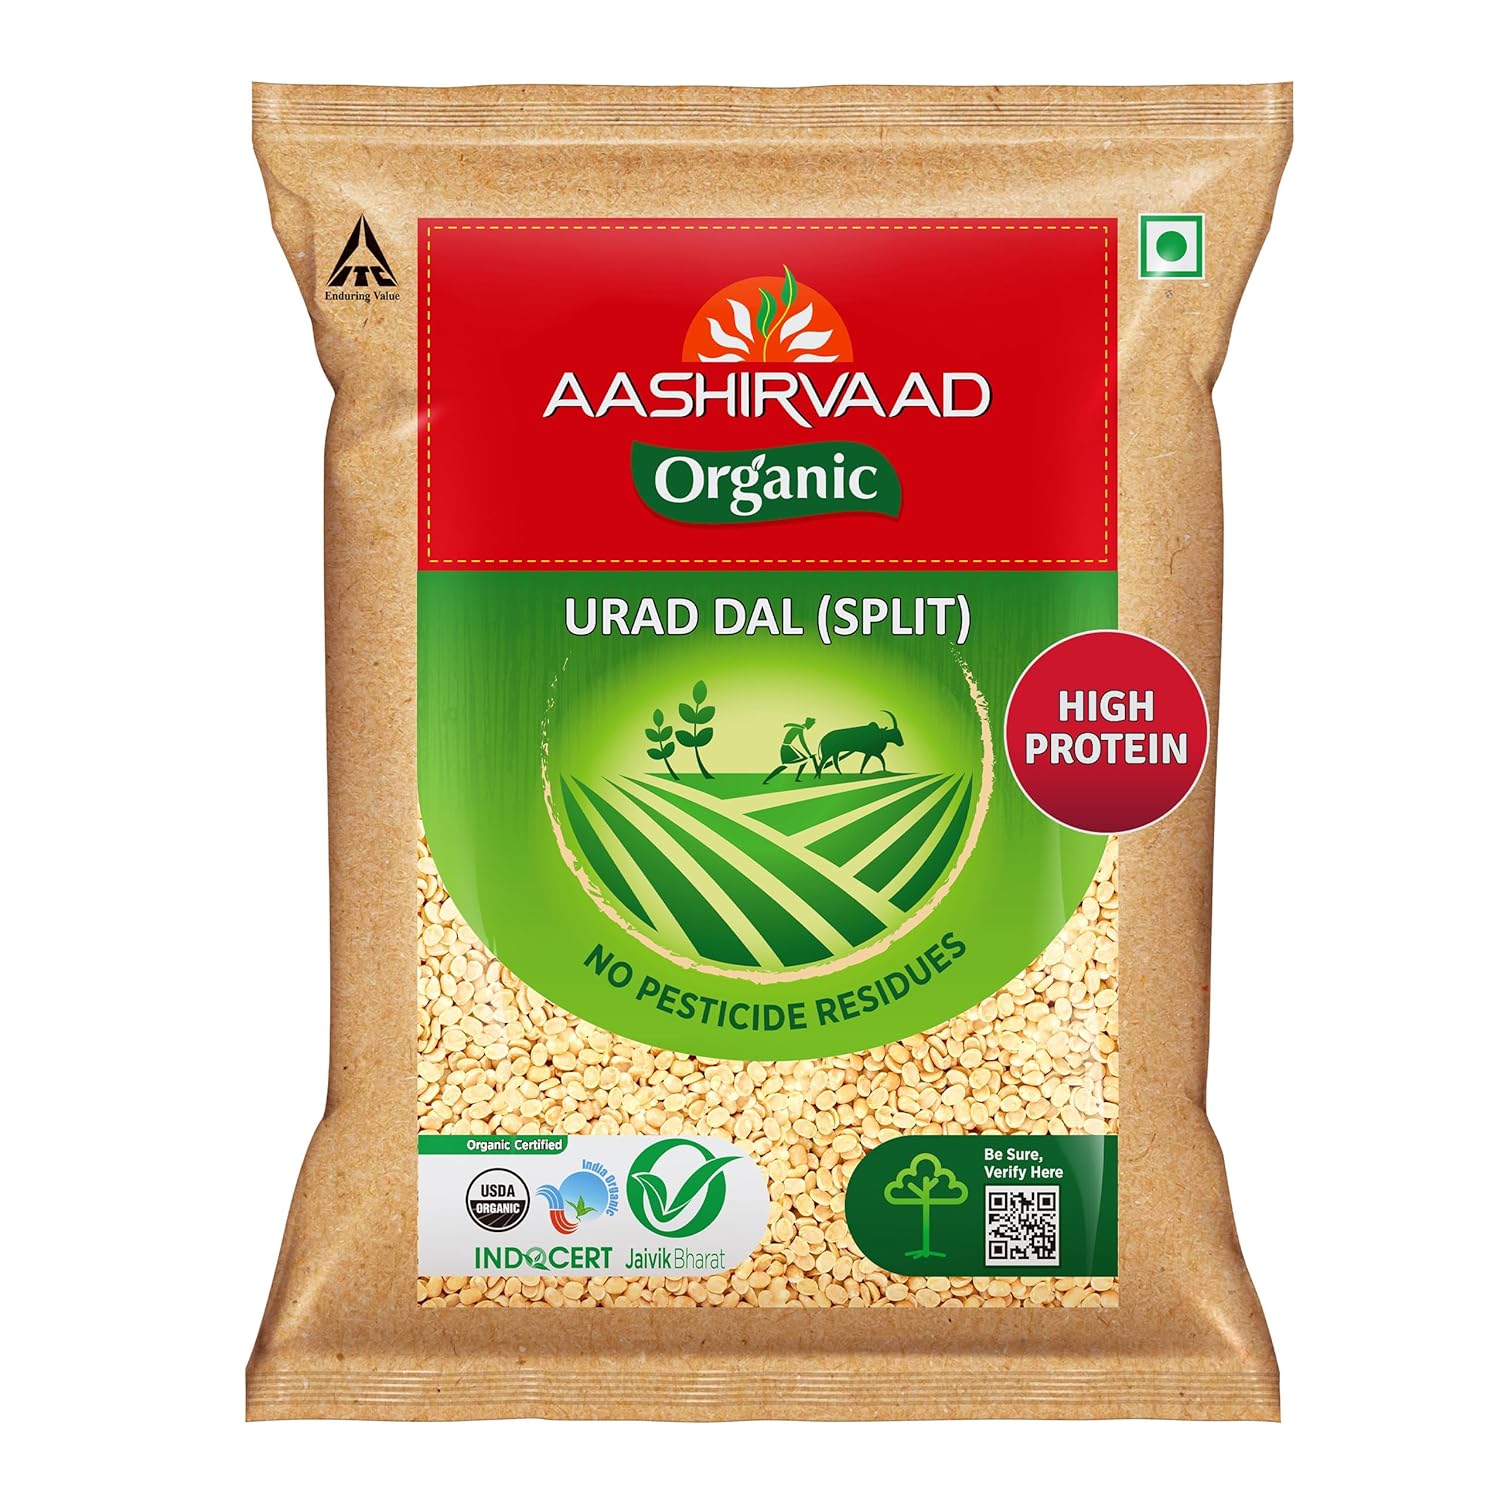 Aashirvaad Organic Urad Dal 1kg